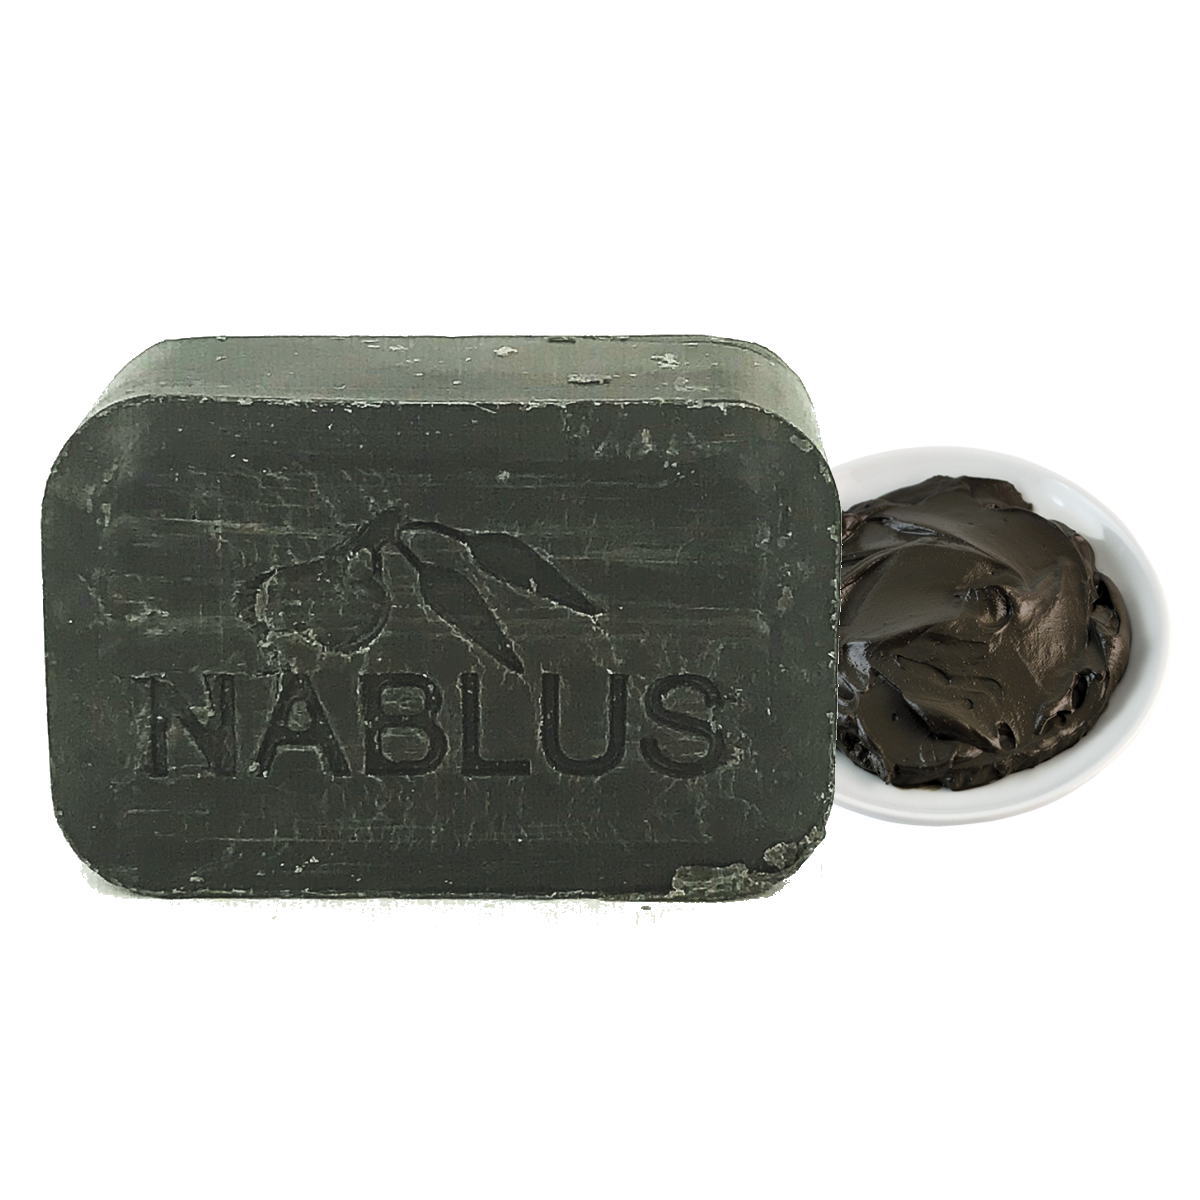 Nablus Soap ナーブルスソープ – 死海の泥 – 無添加 オーガニック石鹸